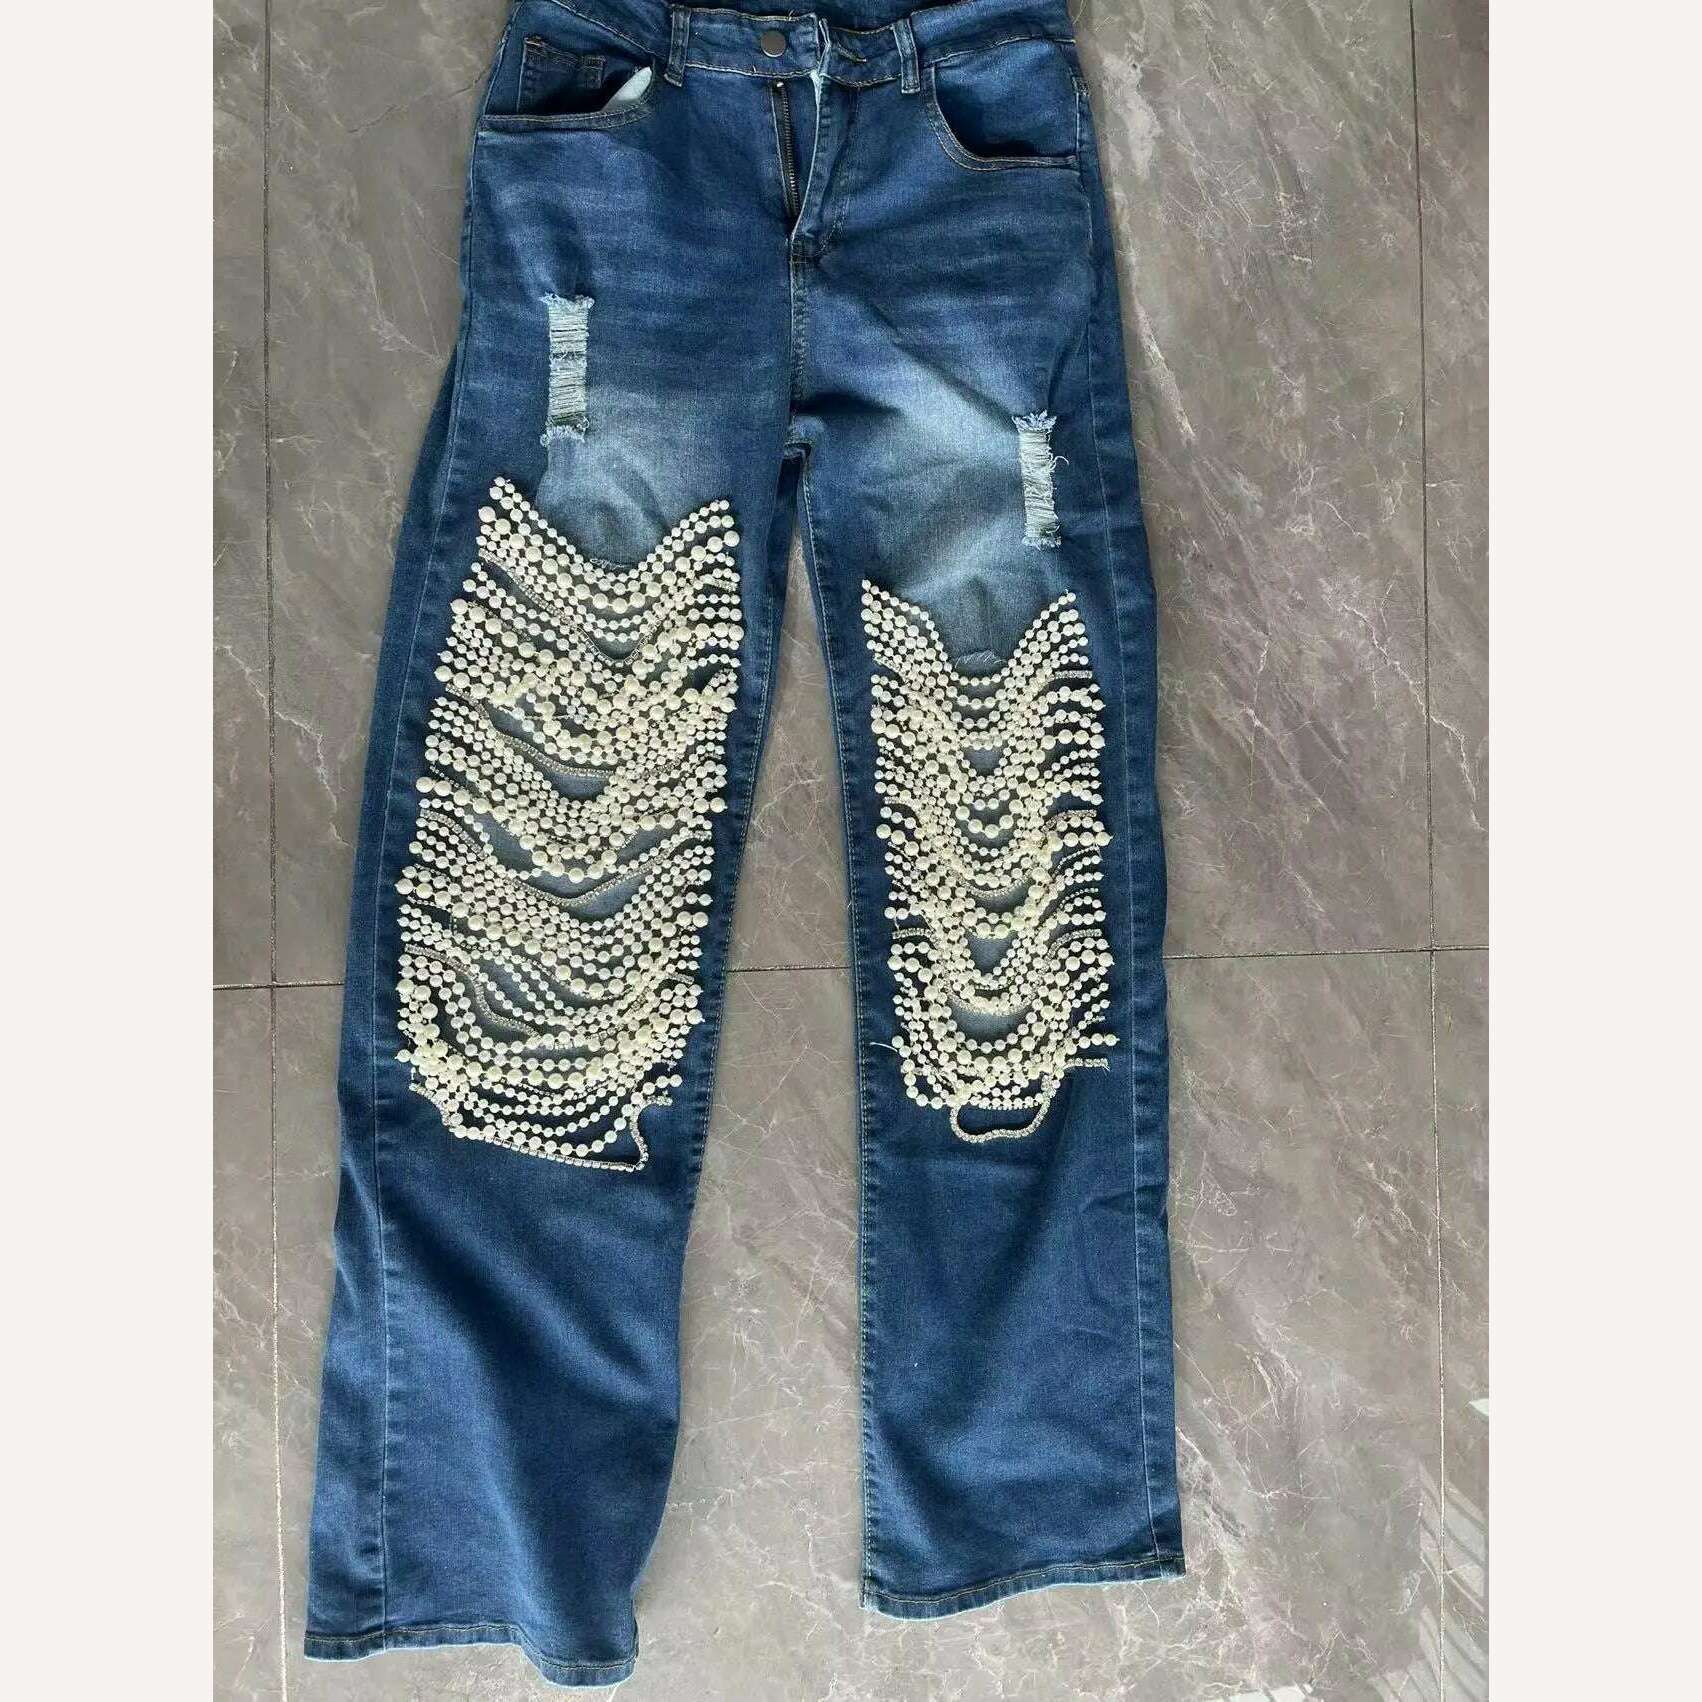 KIMLUD, Beachapche   Straight Jeans Women Holes Pearls Diamond Rhinstones Solid High Waist Fashion Cotton High Street Denim Pants, DEEP BLUE / S, KIMLUD Women's Clothes